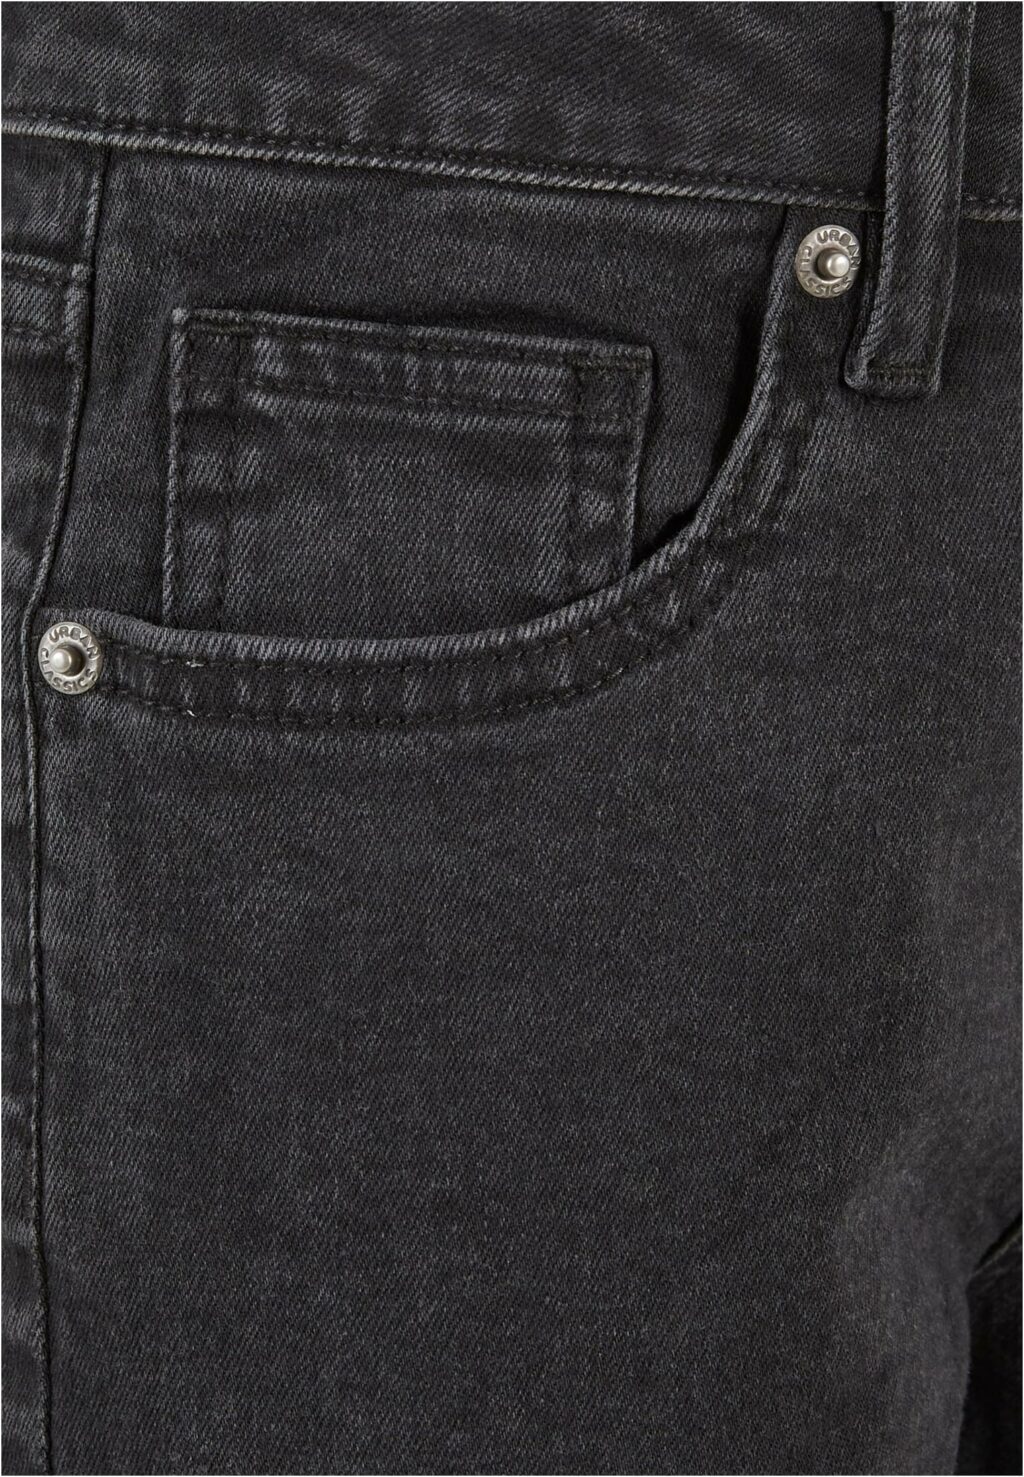 Girls Organic Stretch Denim 5 Pocket Shorts black washed UCK4796